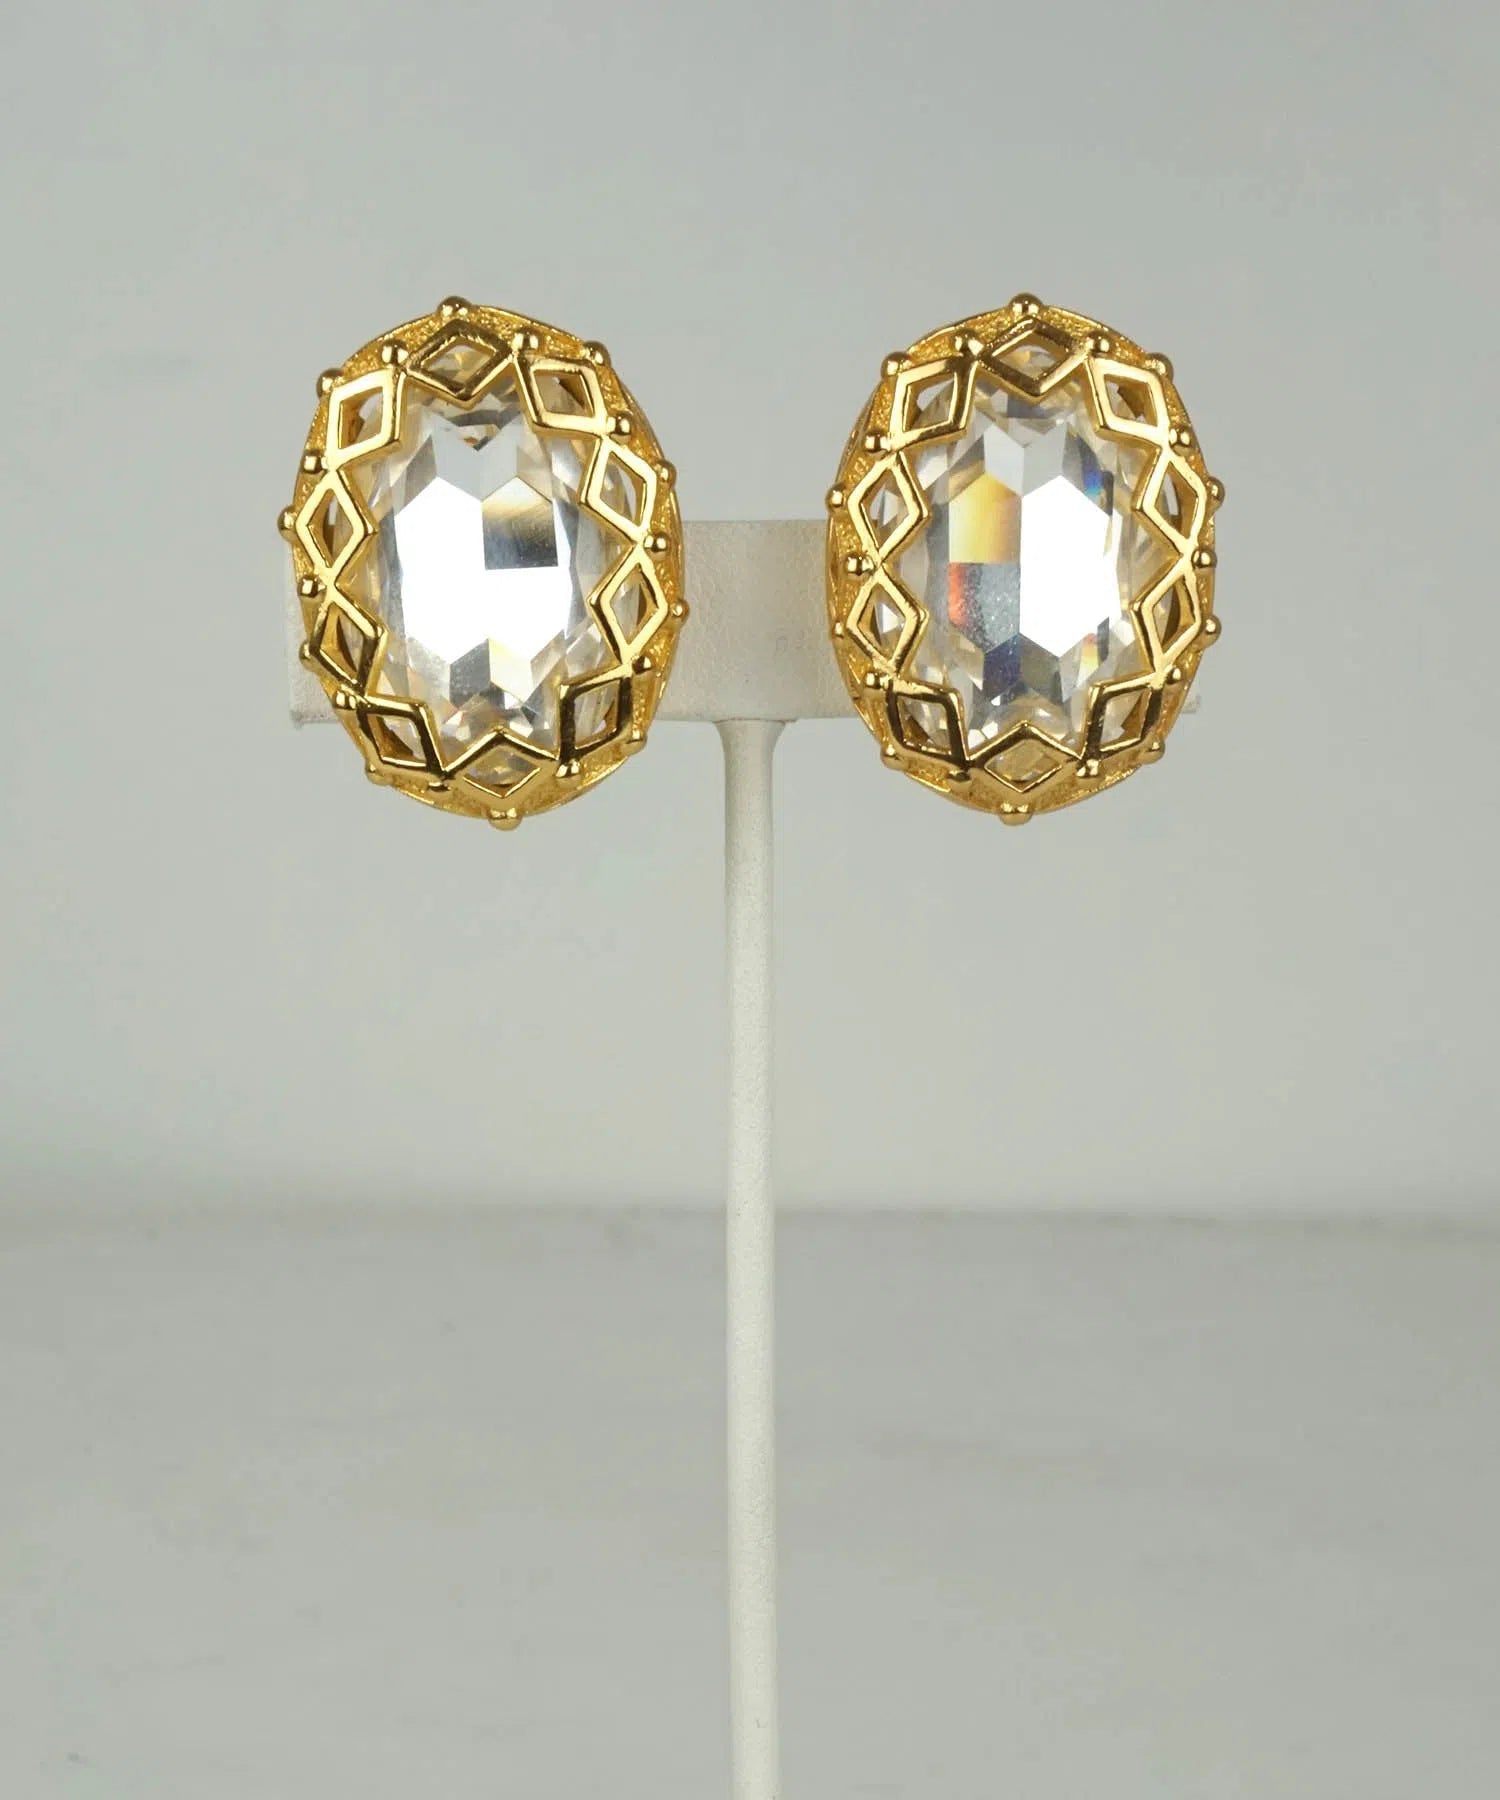 Christian Dior Vintage Headlight Earrings 1960's-1970's - Foxy Couture Carmel